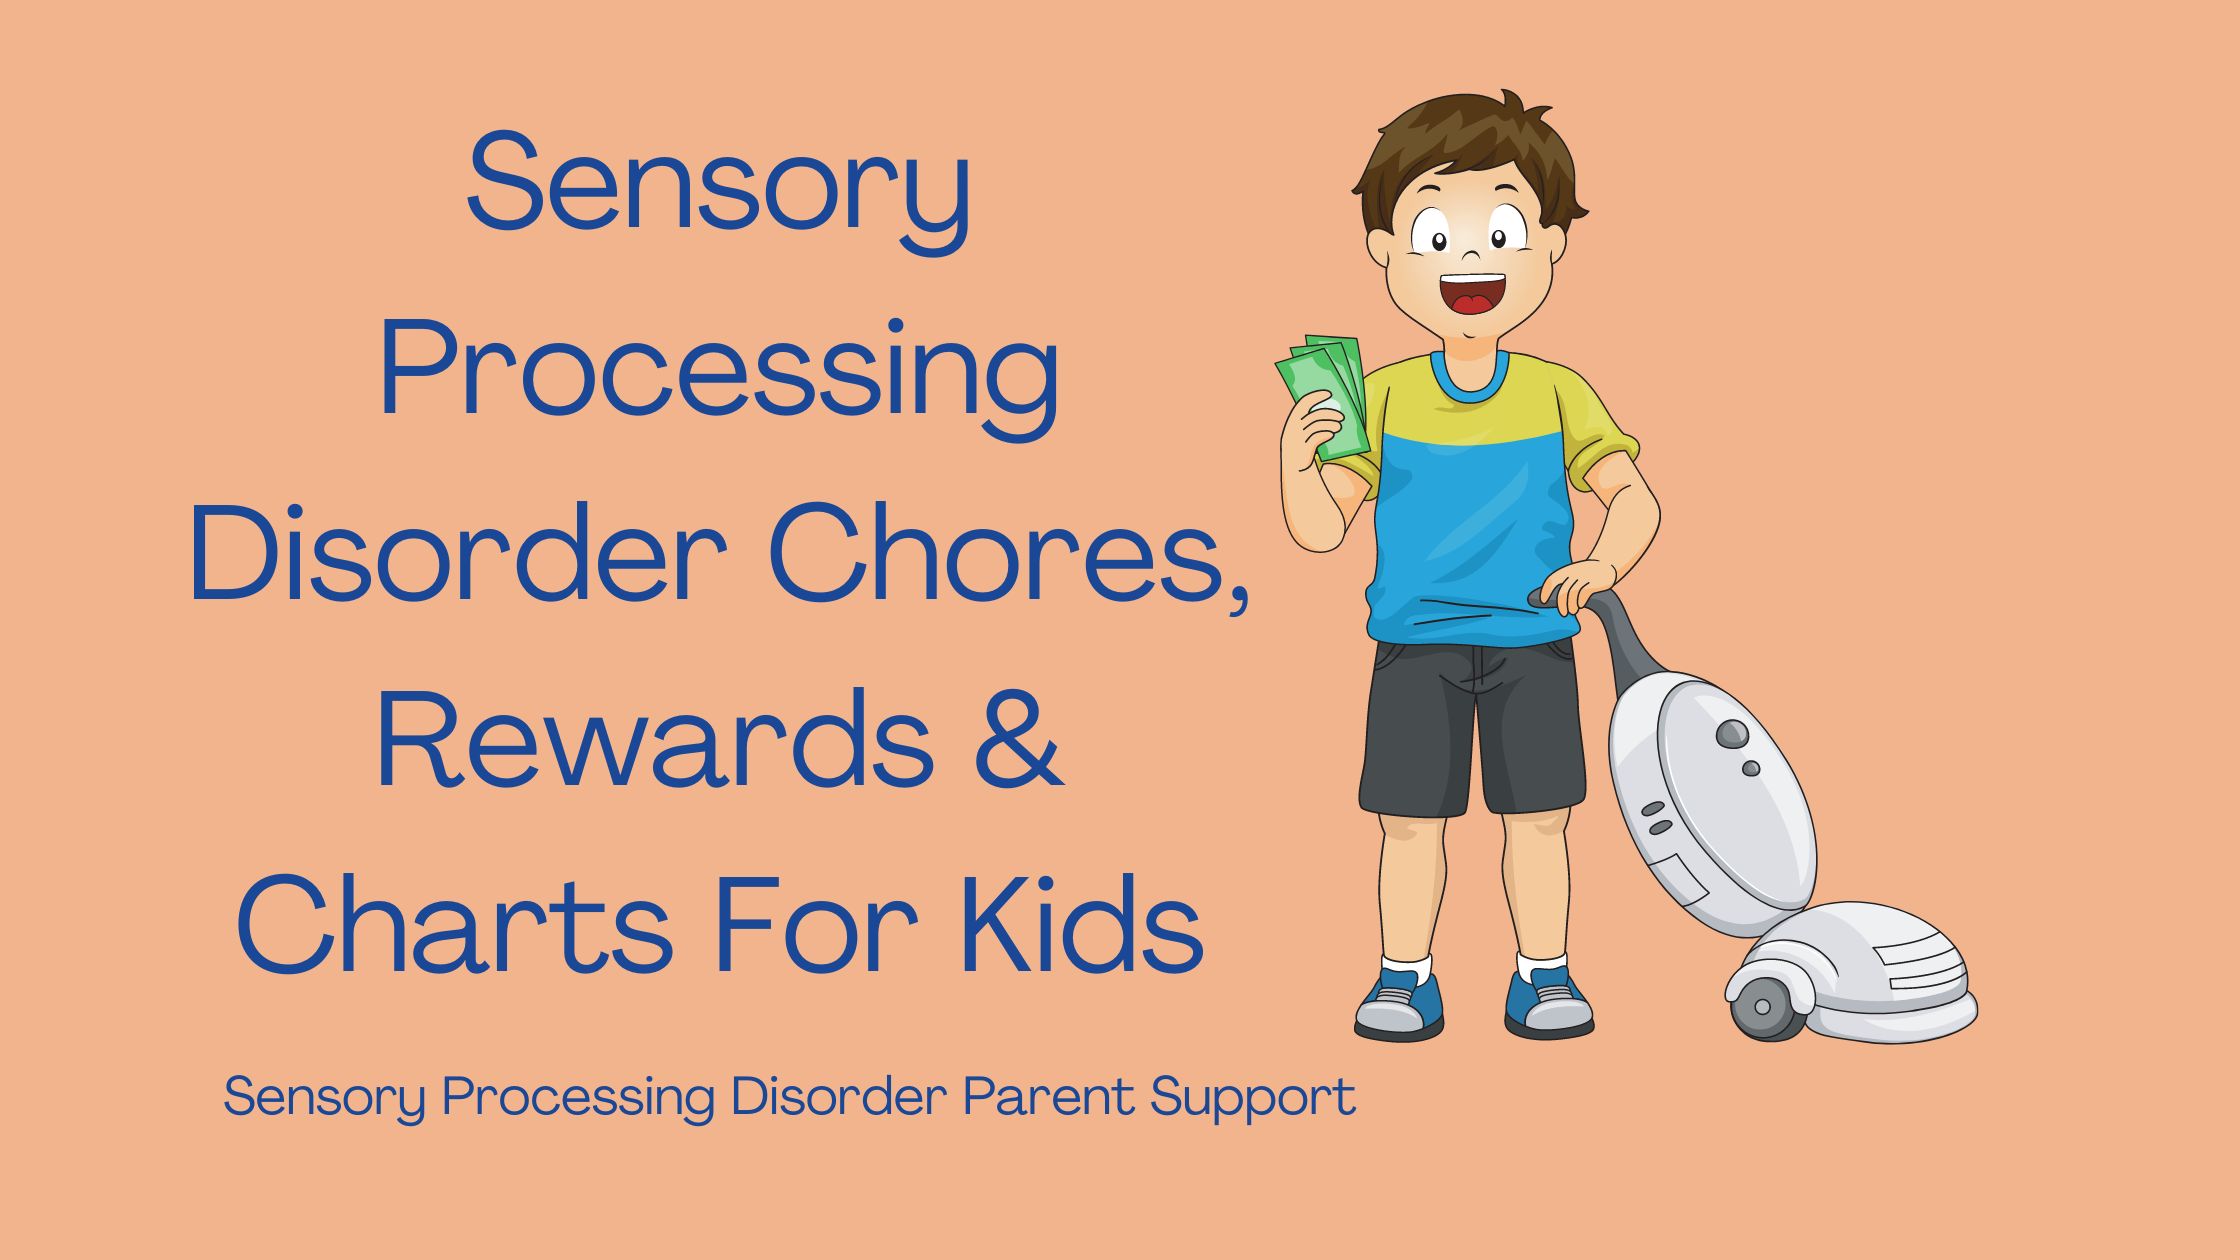 boy with sensory processing disorder Sensory Processing Disorder Chores, Rewards & Charts For Kids